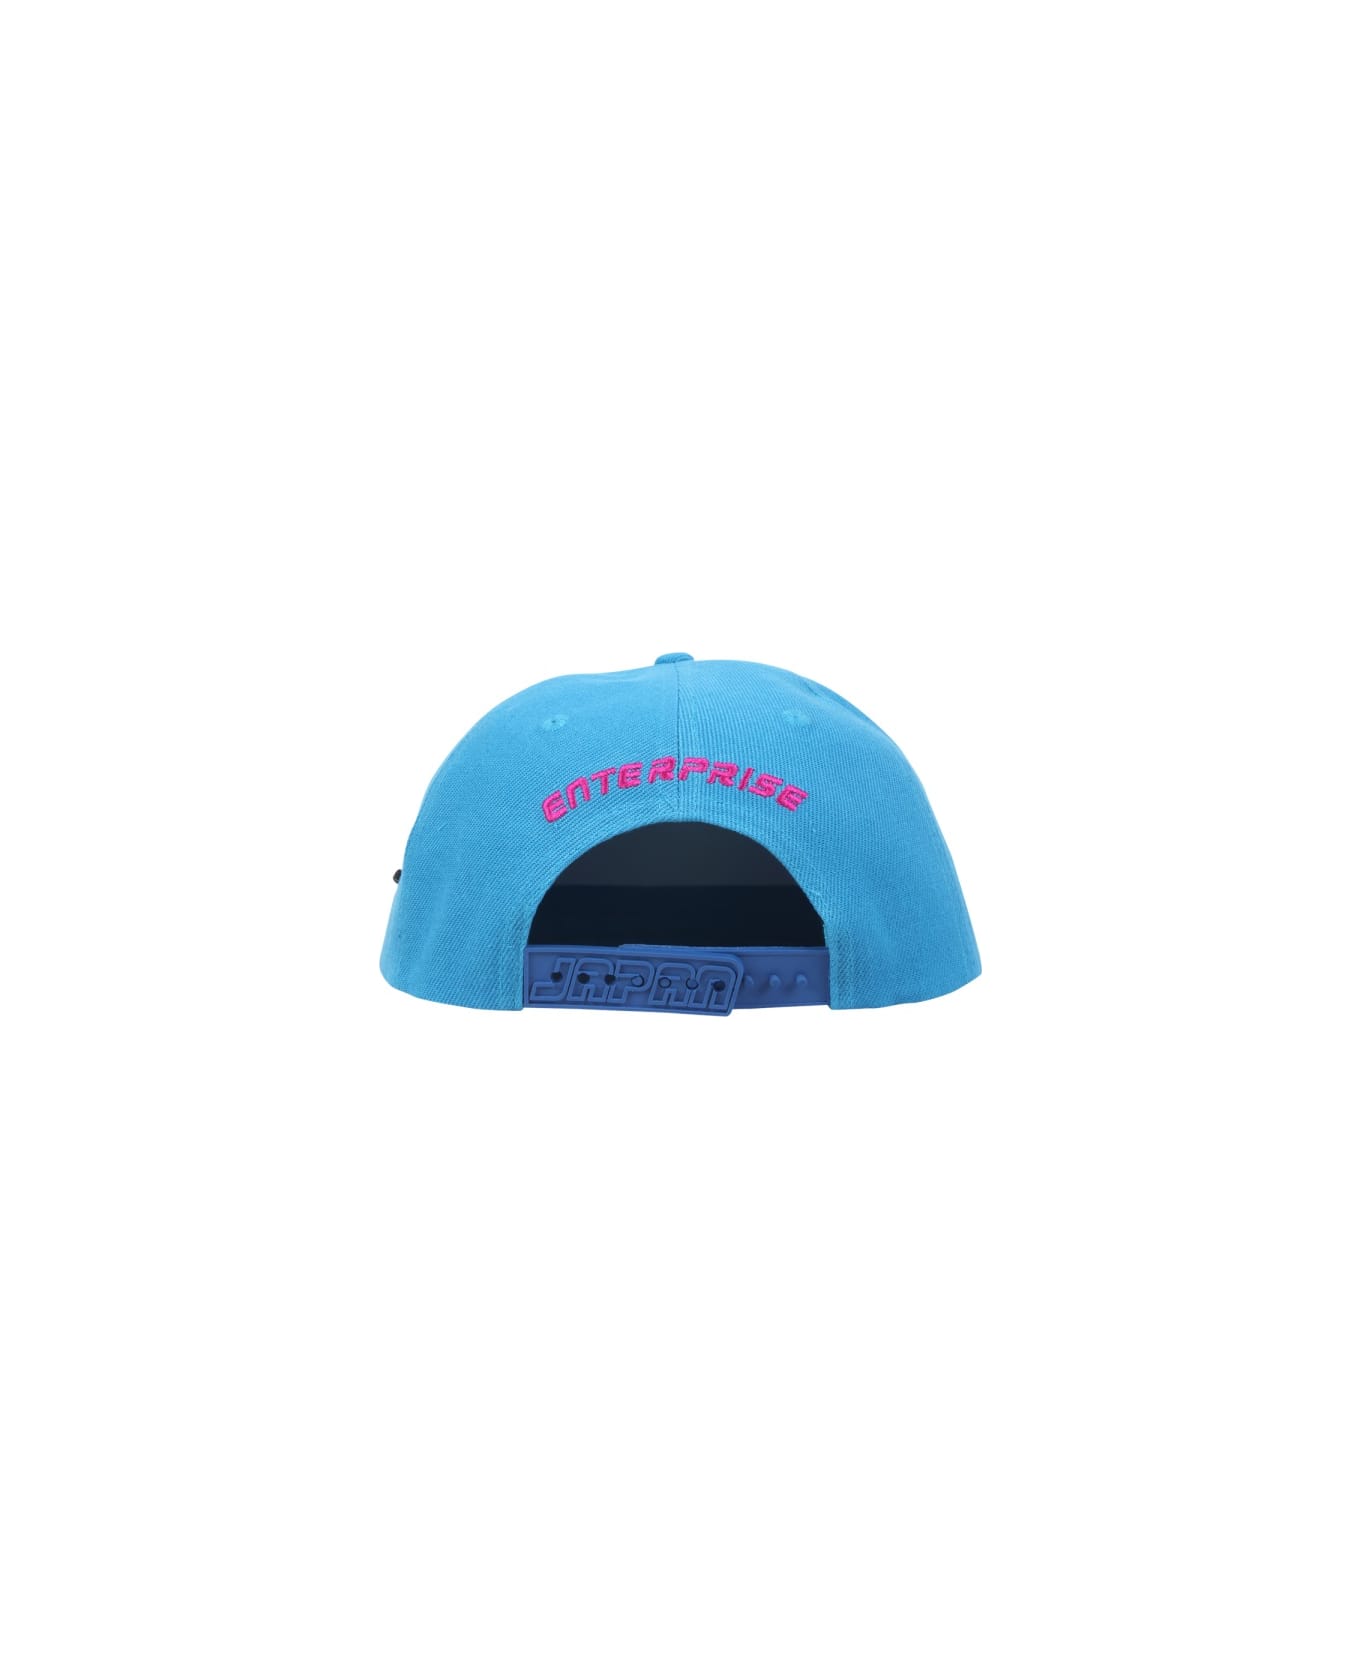 Enterprise Japan Snapback Hat - AZURE 帽子